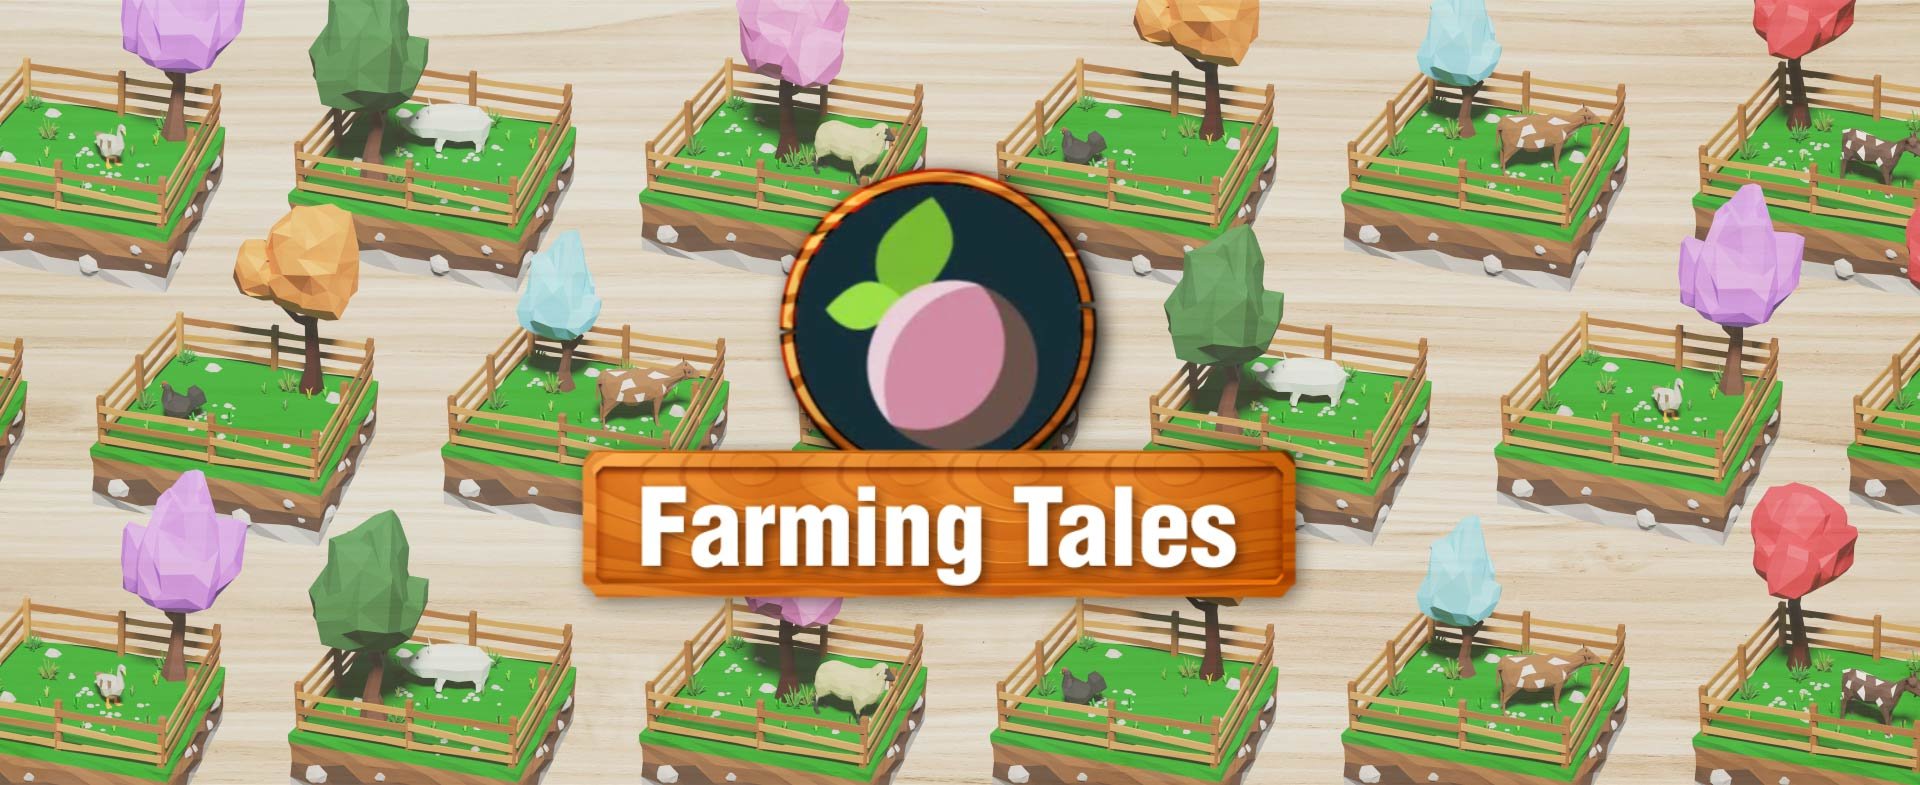 farming tales.jpg